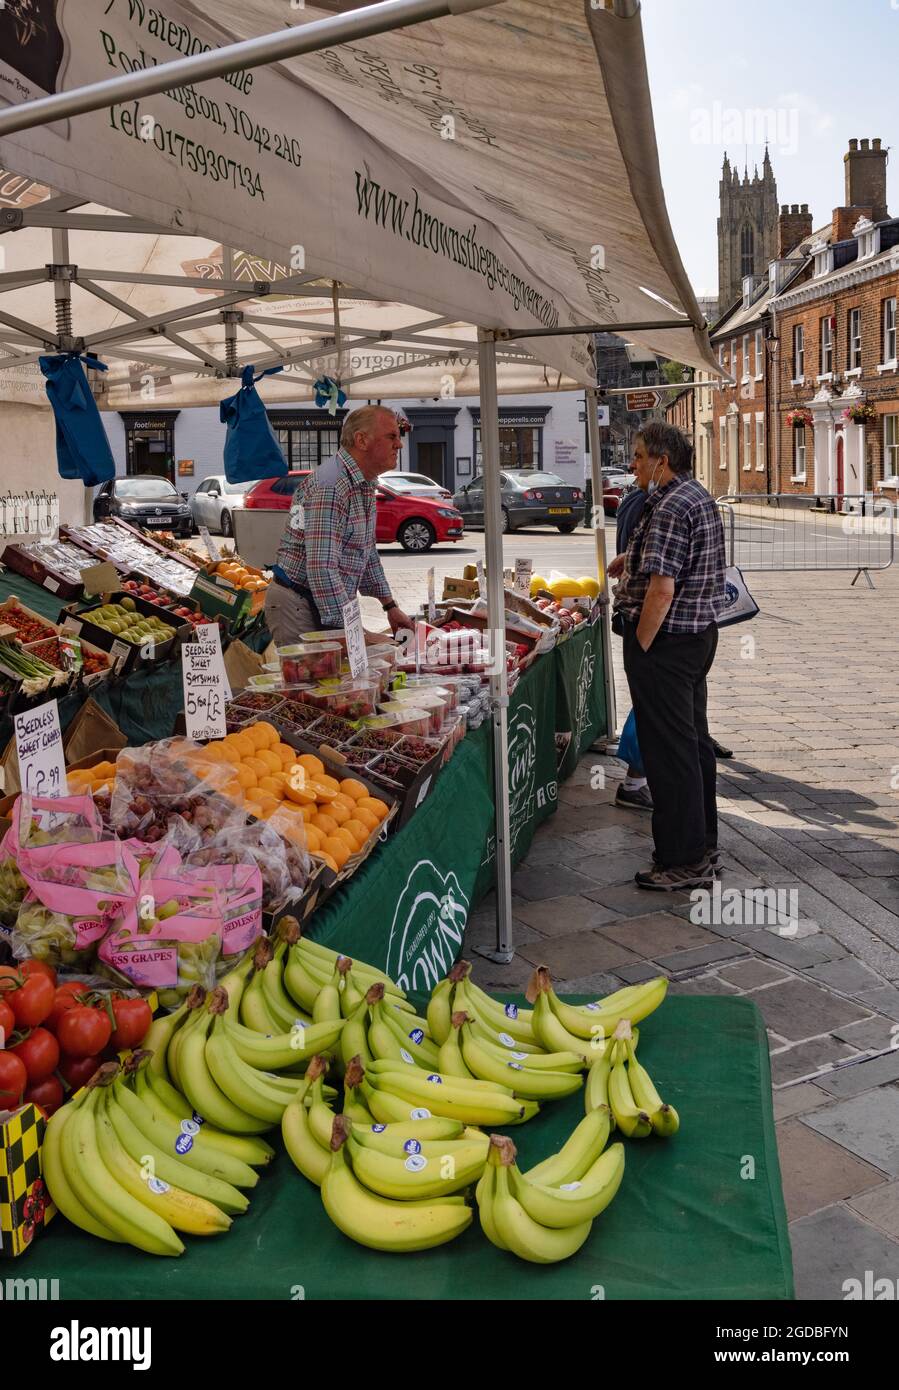 UK market town; Greengrocer stall, selling fruit, Beverley market, Beverley, East Yorkshire UK Stock Photo